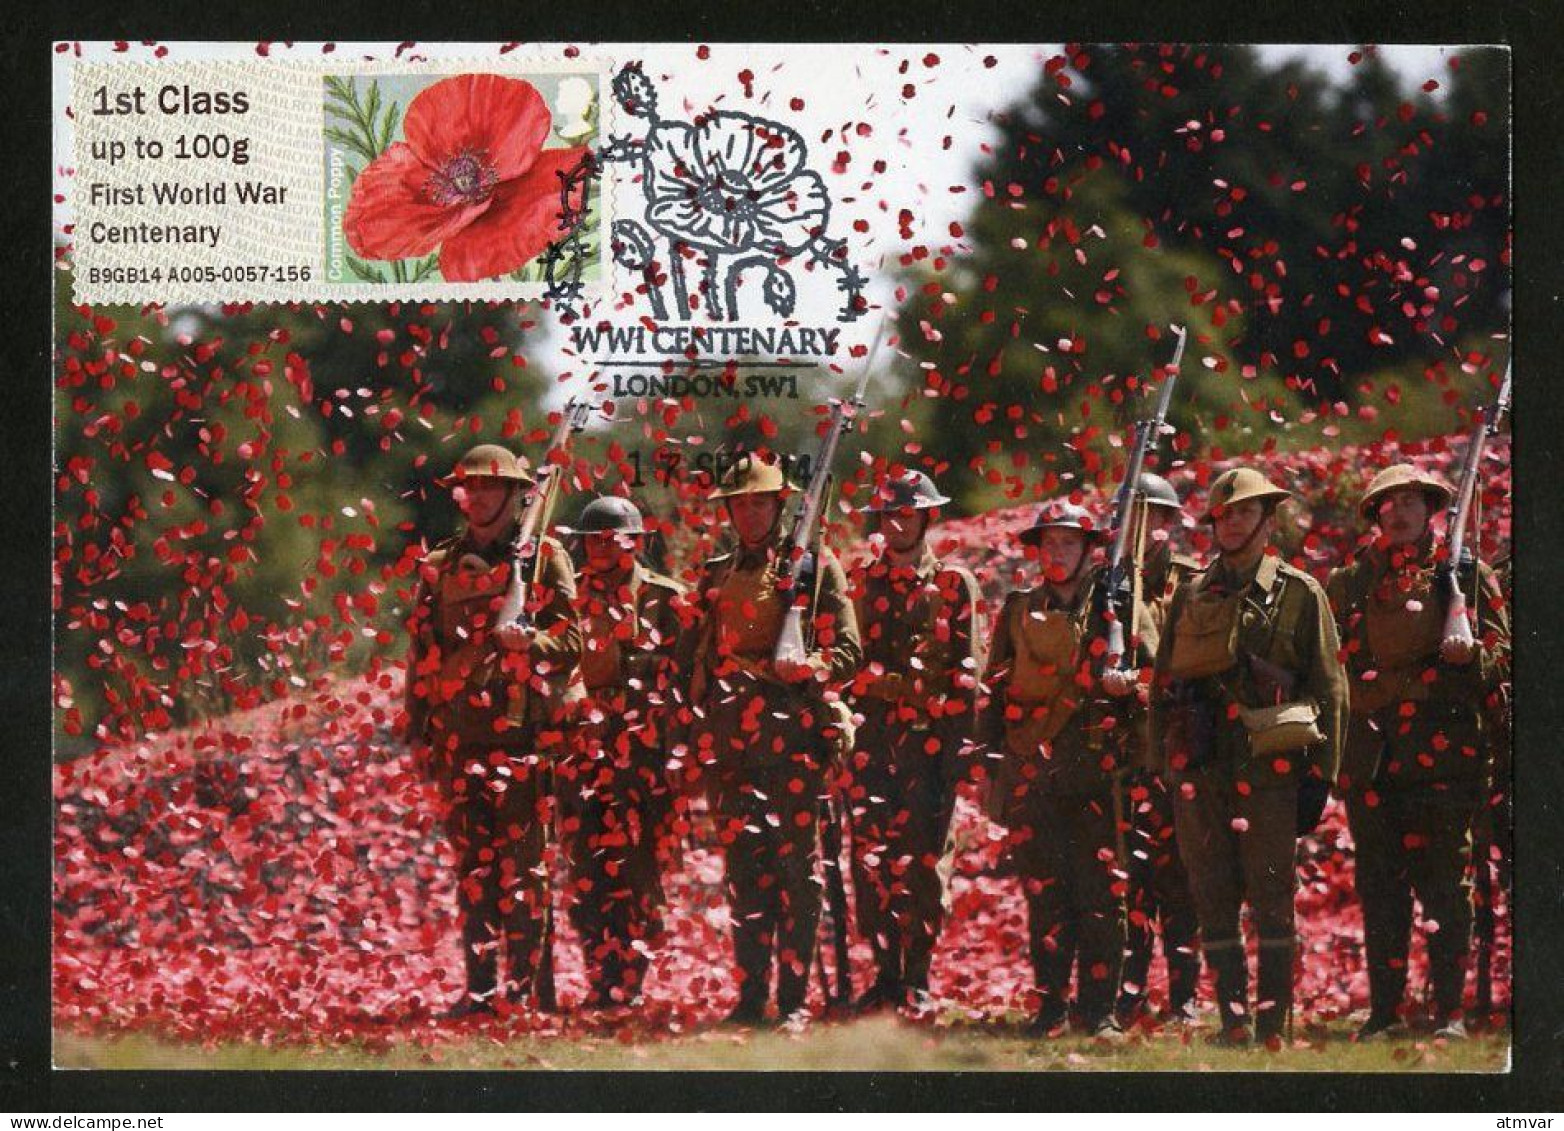 UK (2014) Carte Maximum Card ATM Post&Go - First World War Centenary, Tank Museum - Soldiers, Poppy, Coquelicot - Cartes-Maximum (CM)